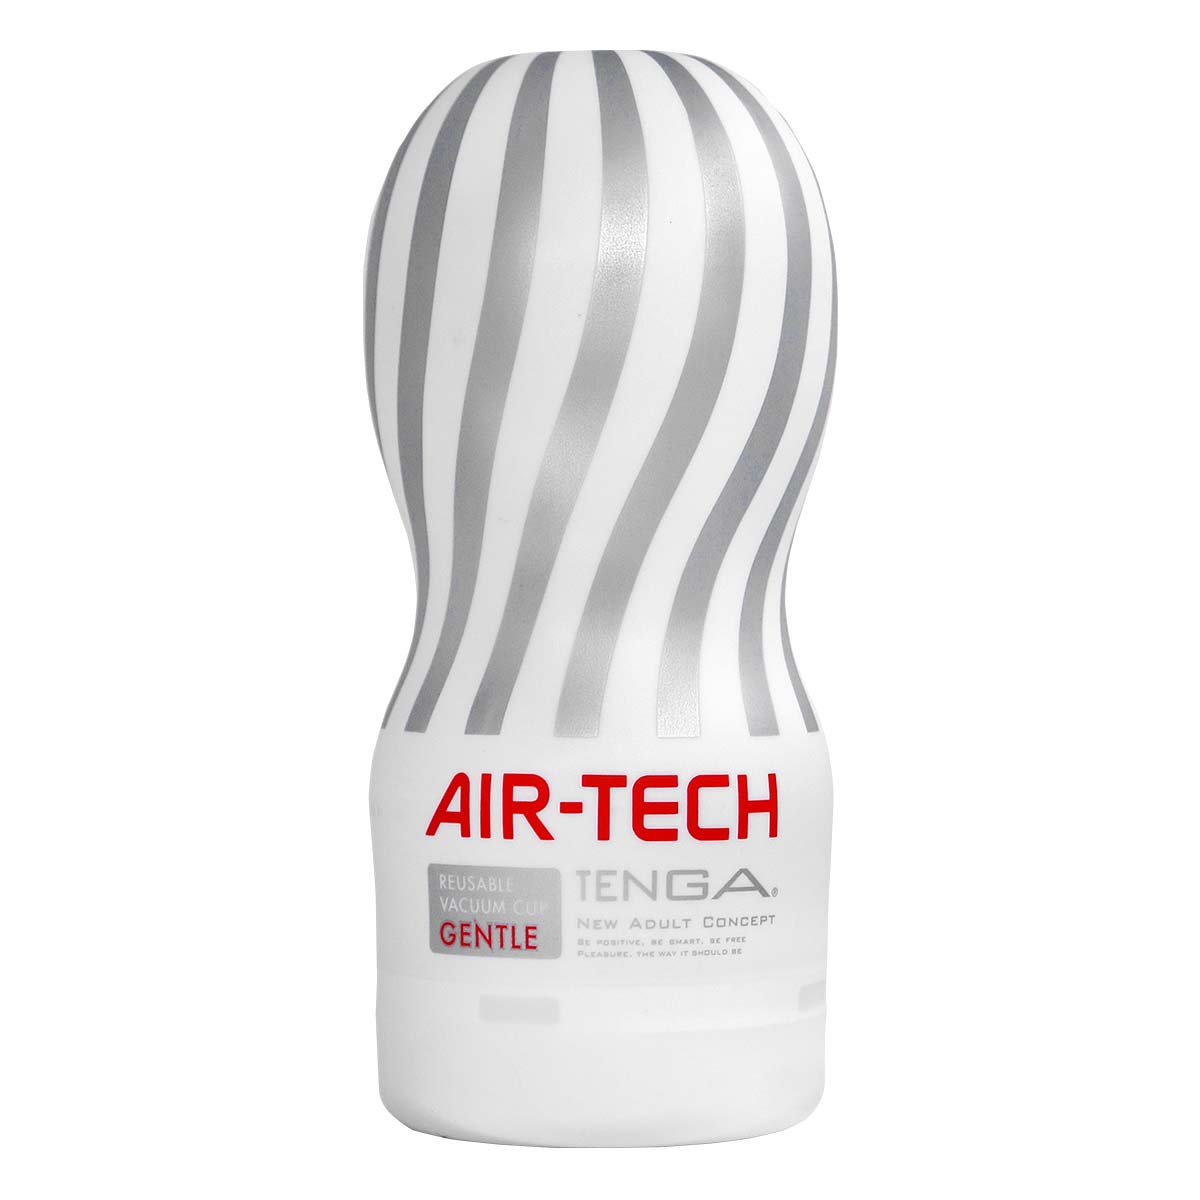 TENGA AIR-TECH 重複使用型真空杯 柔軟型-p_2